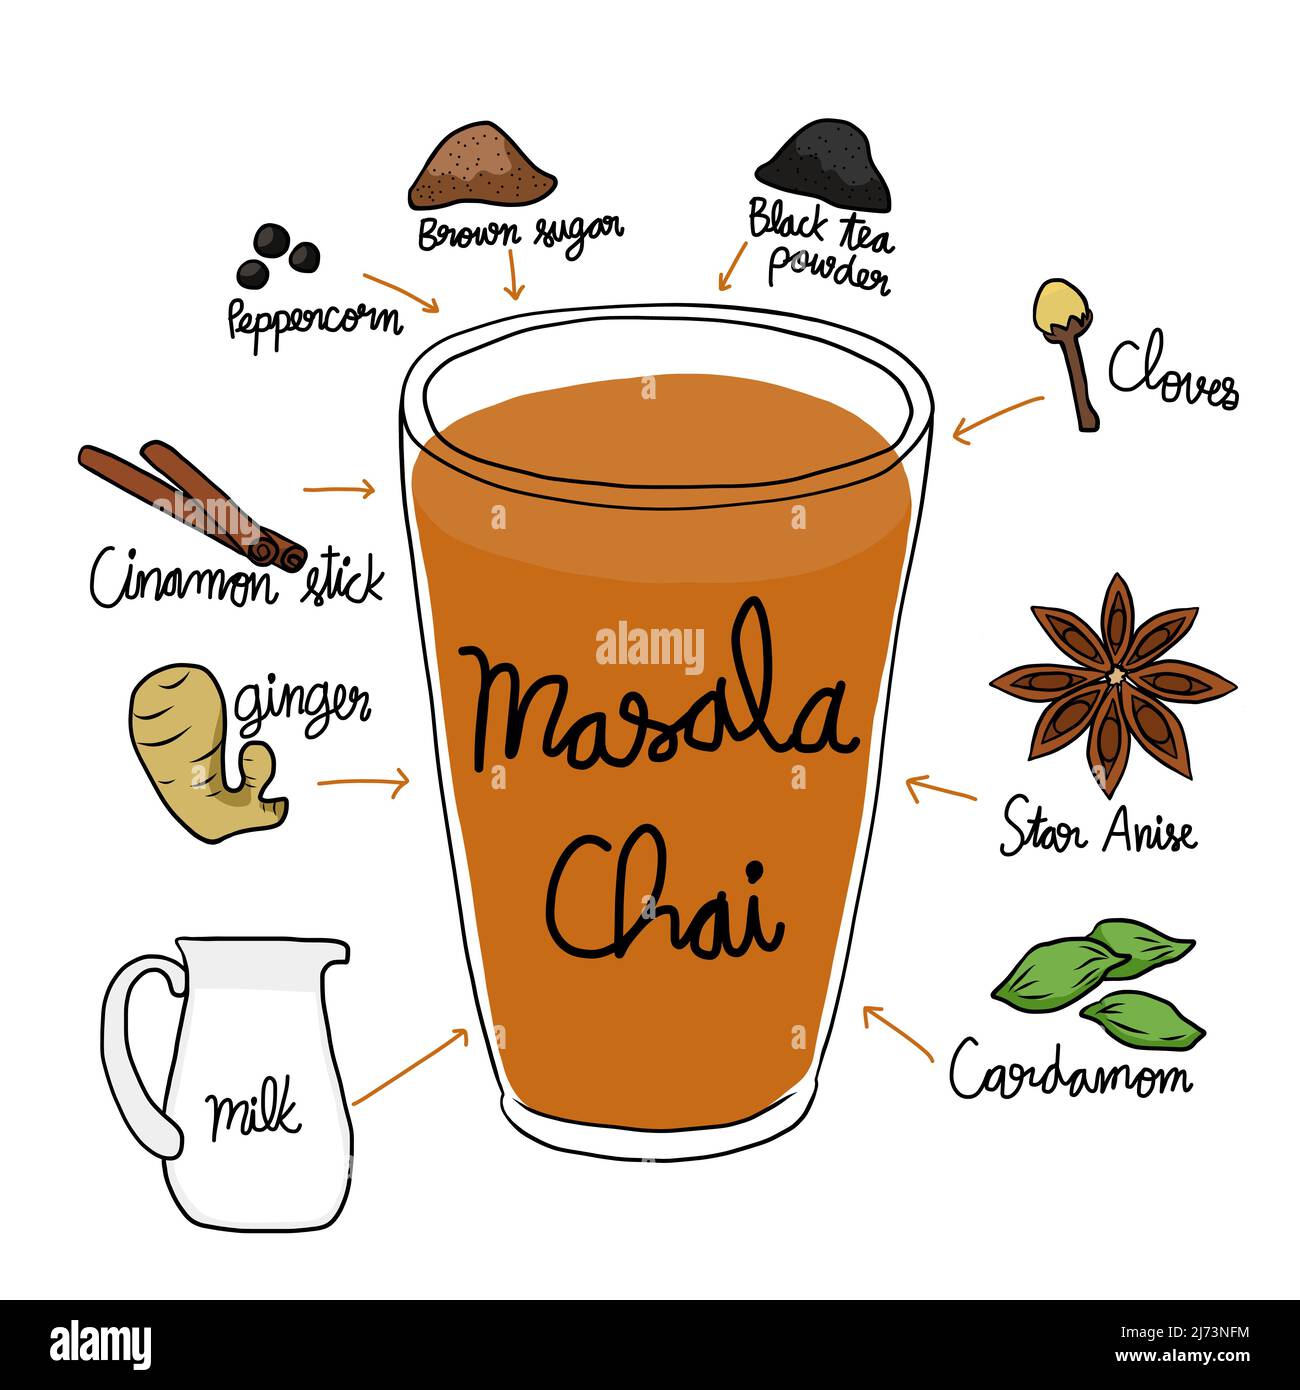 Masala Chai (Indian tea) ingredient vector illustration Stock Vector